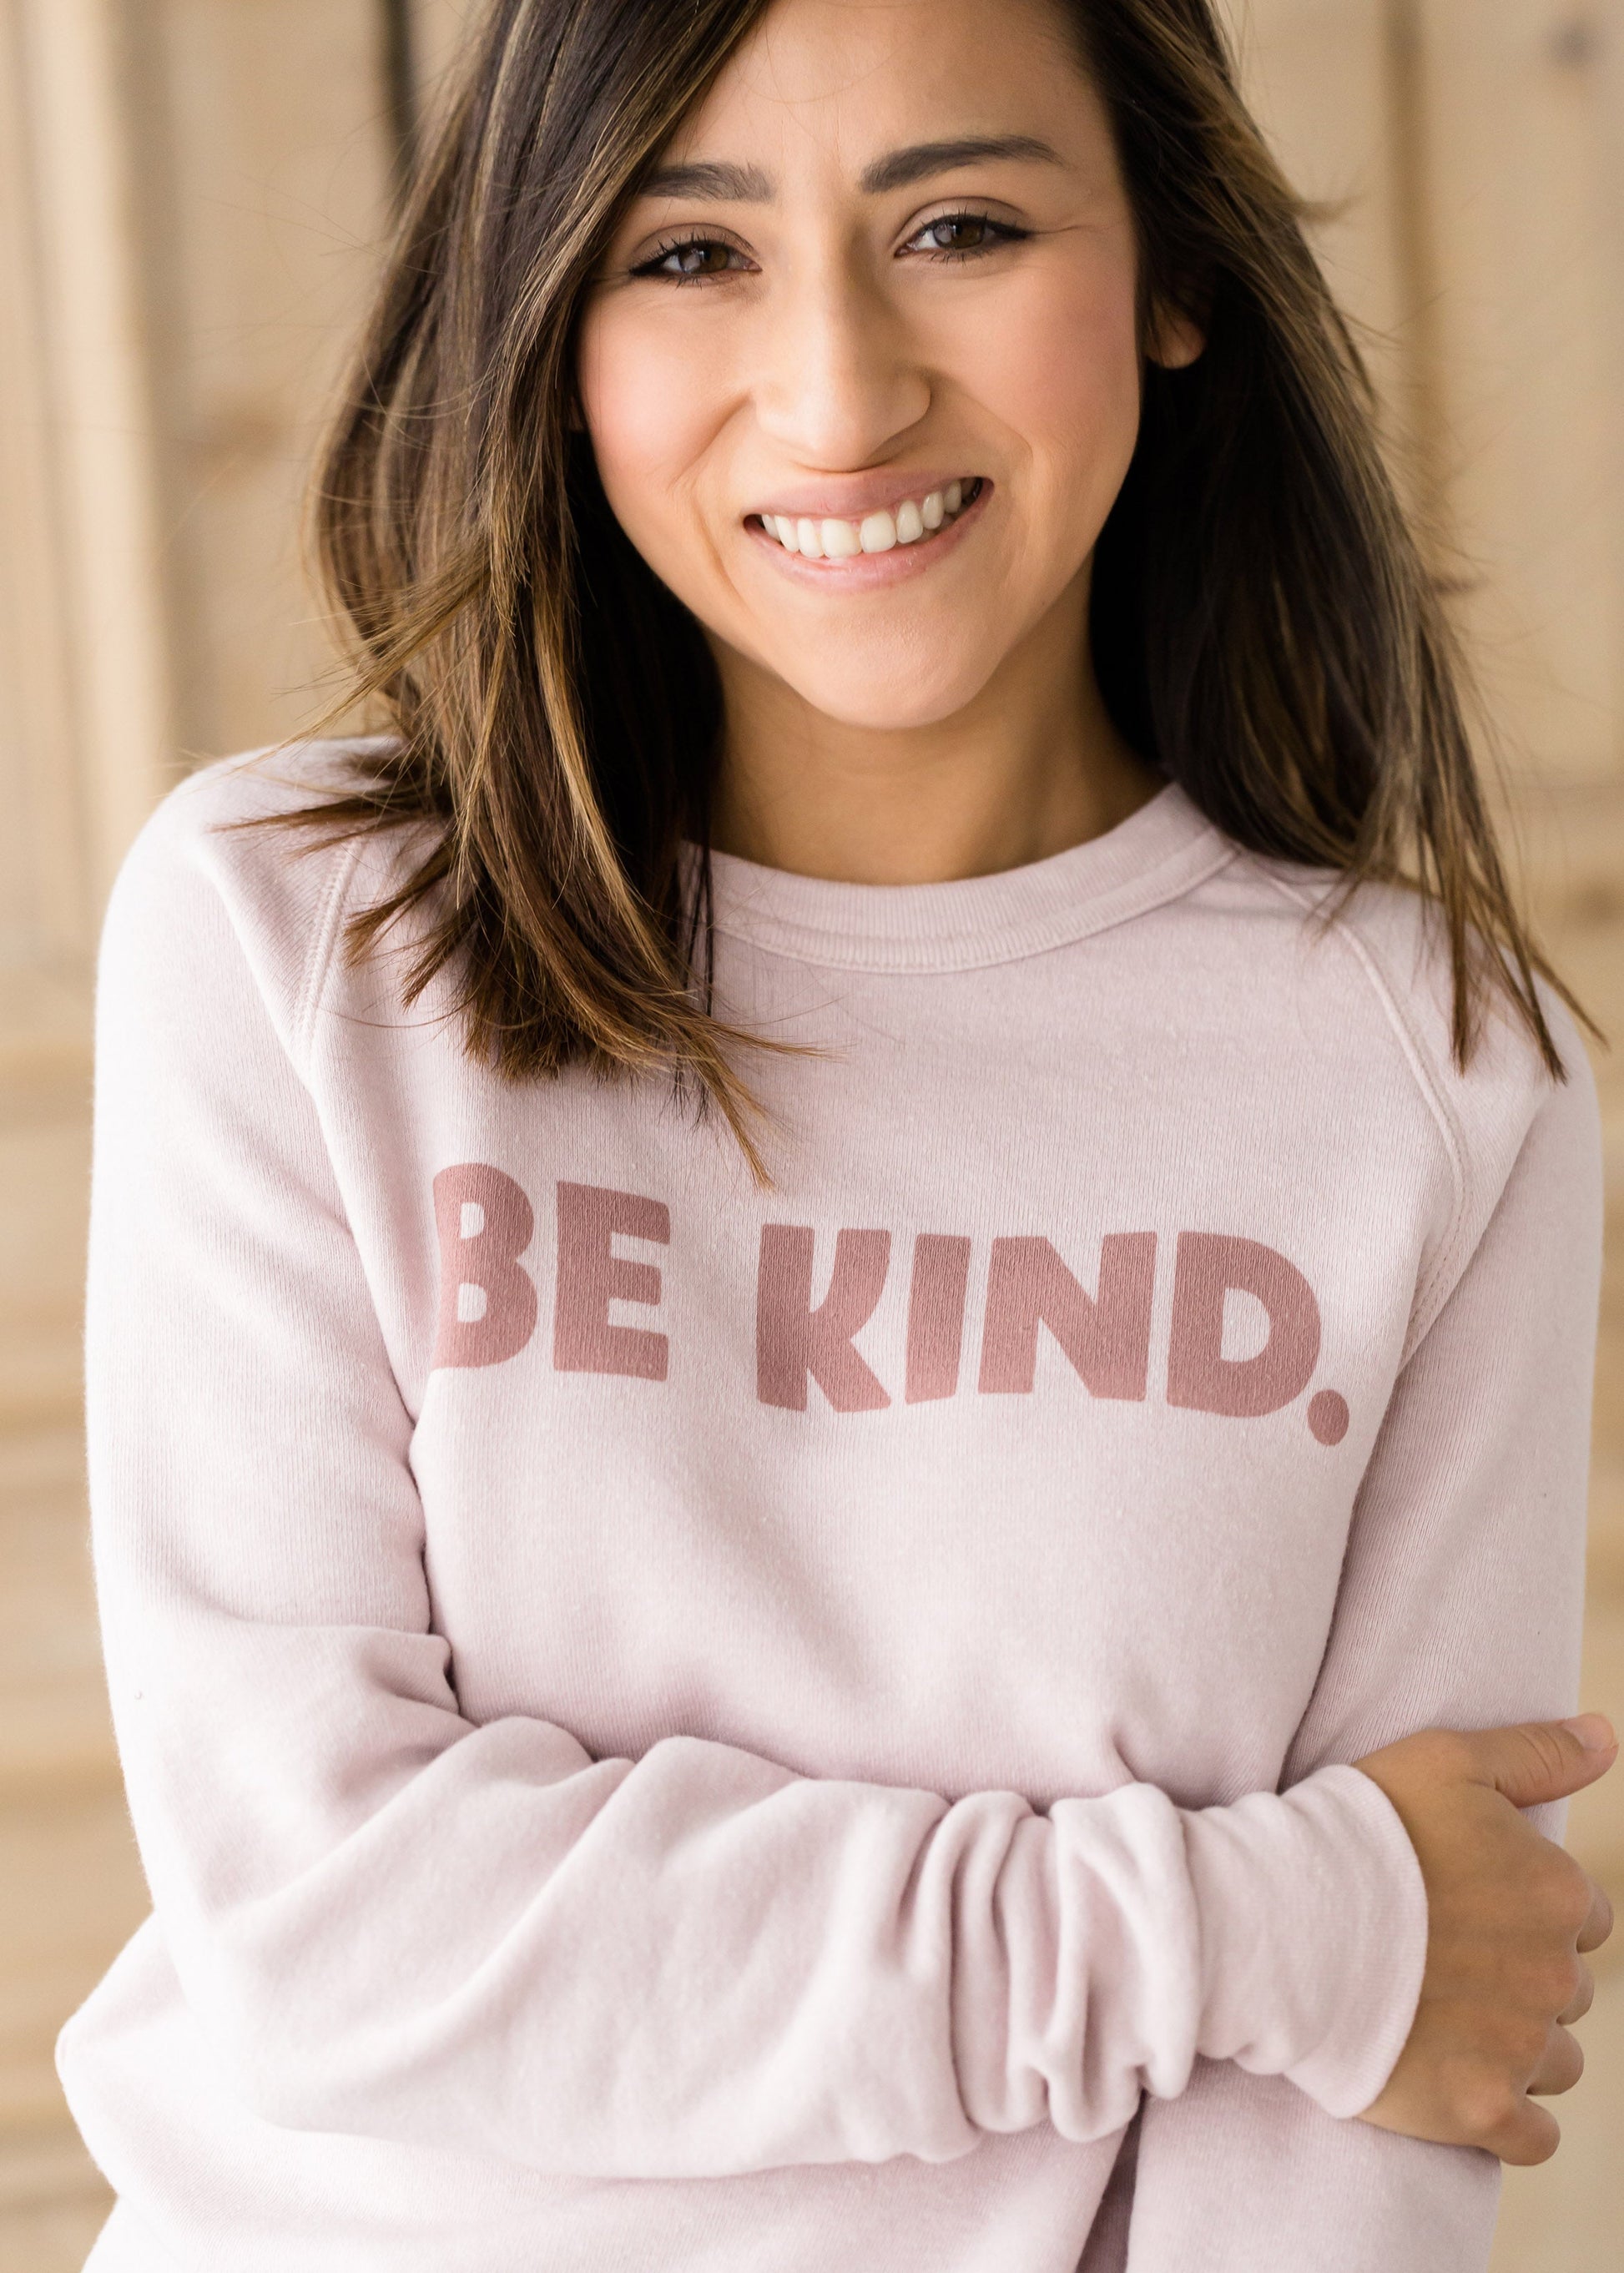 Be Kind Pullover Fleece Sweatshirt - FINAL SALE Tops